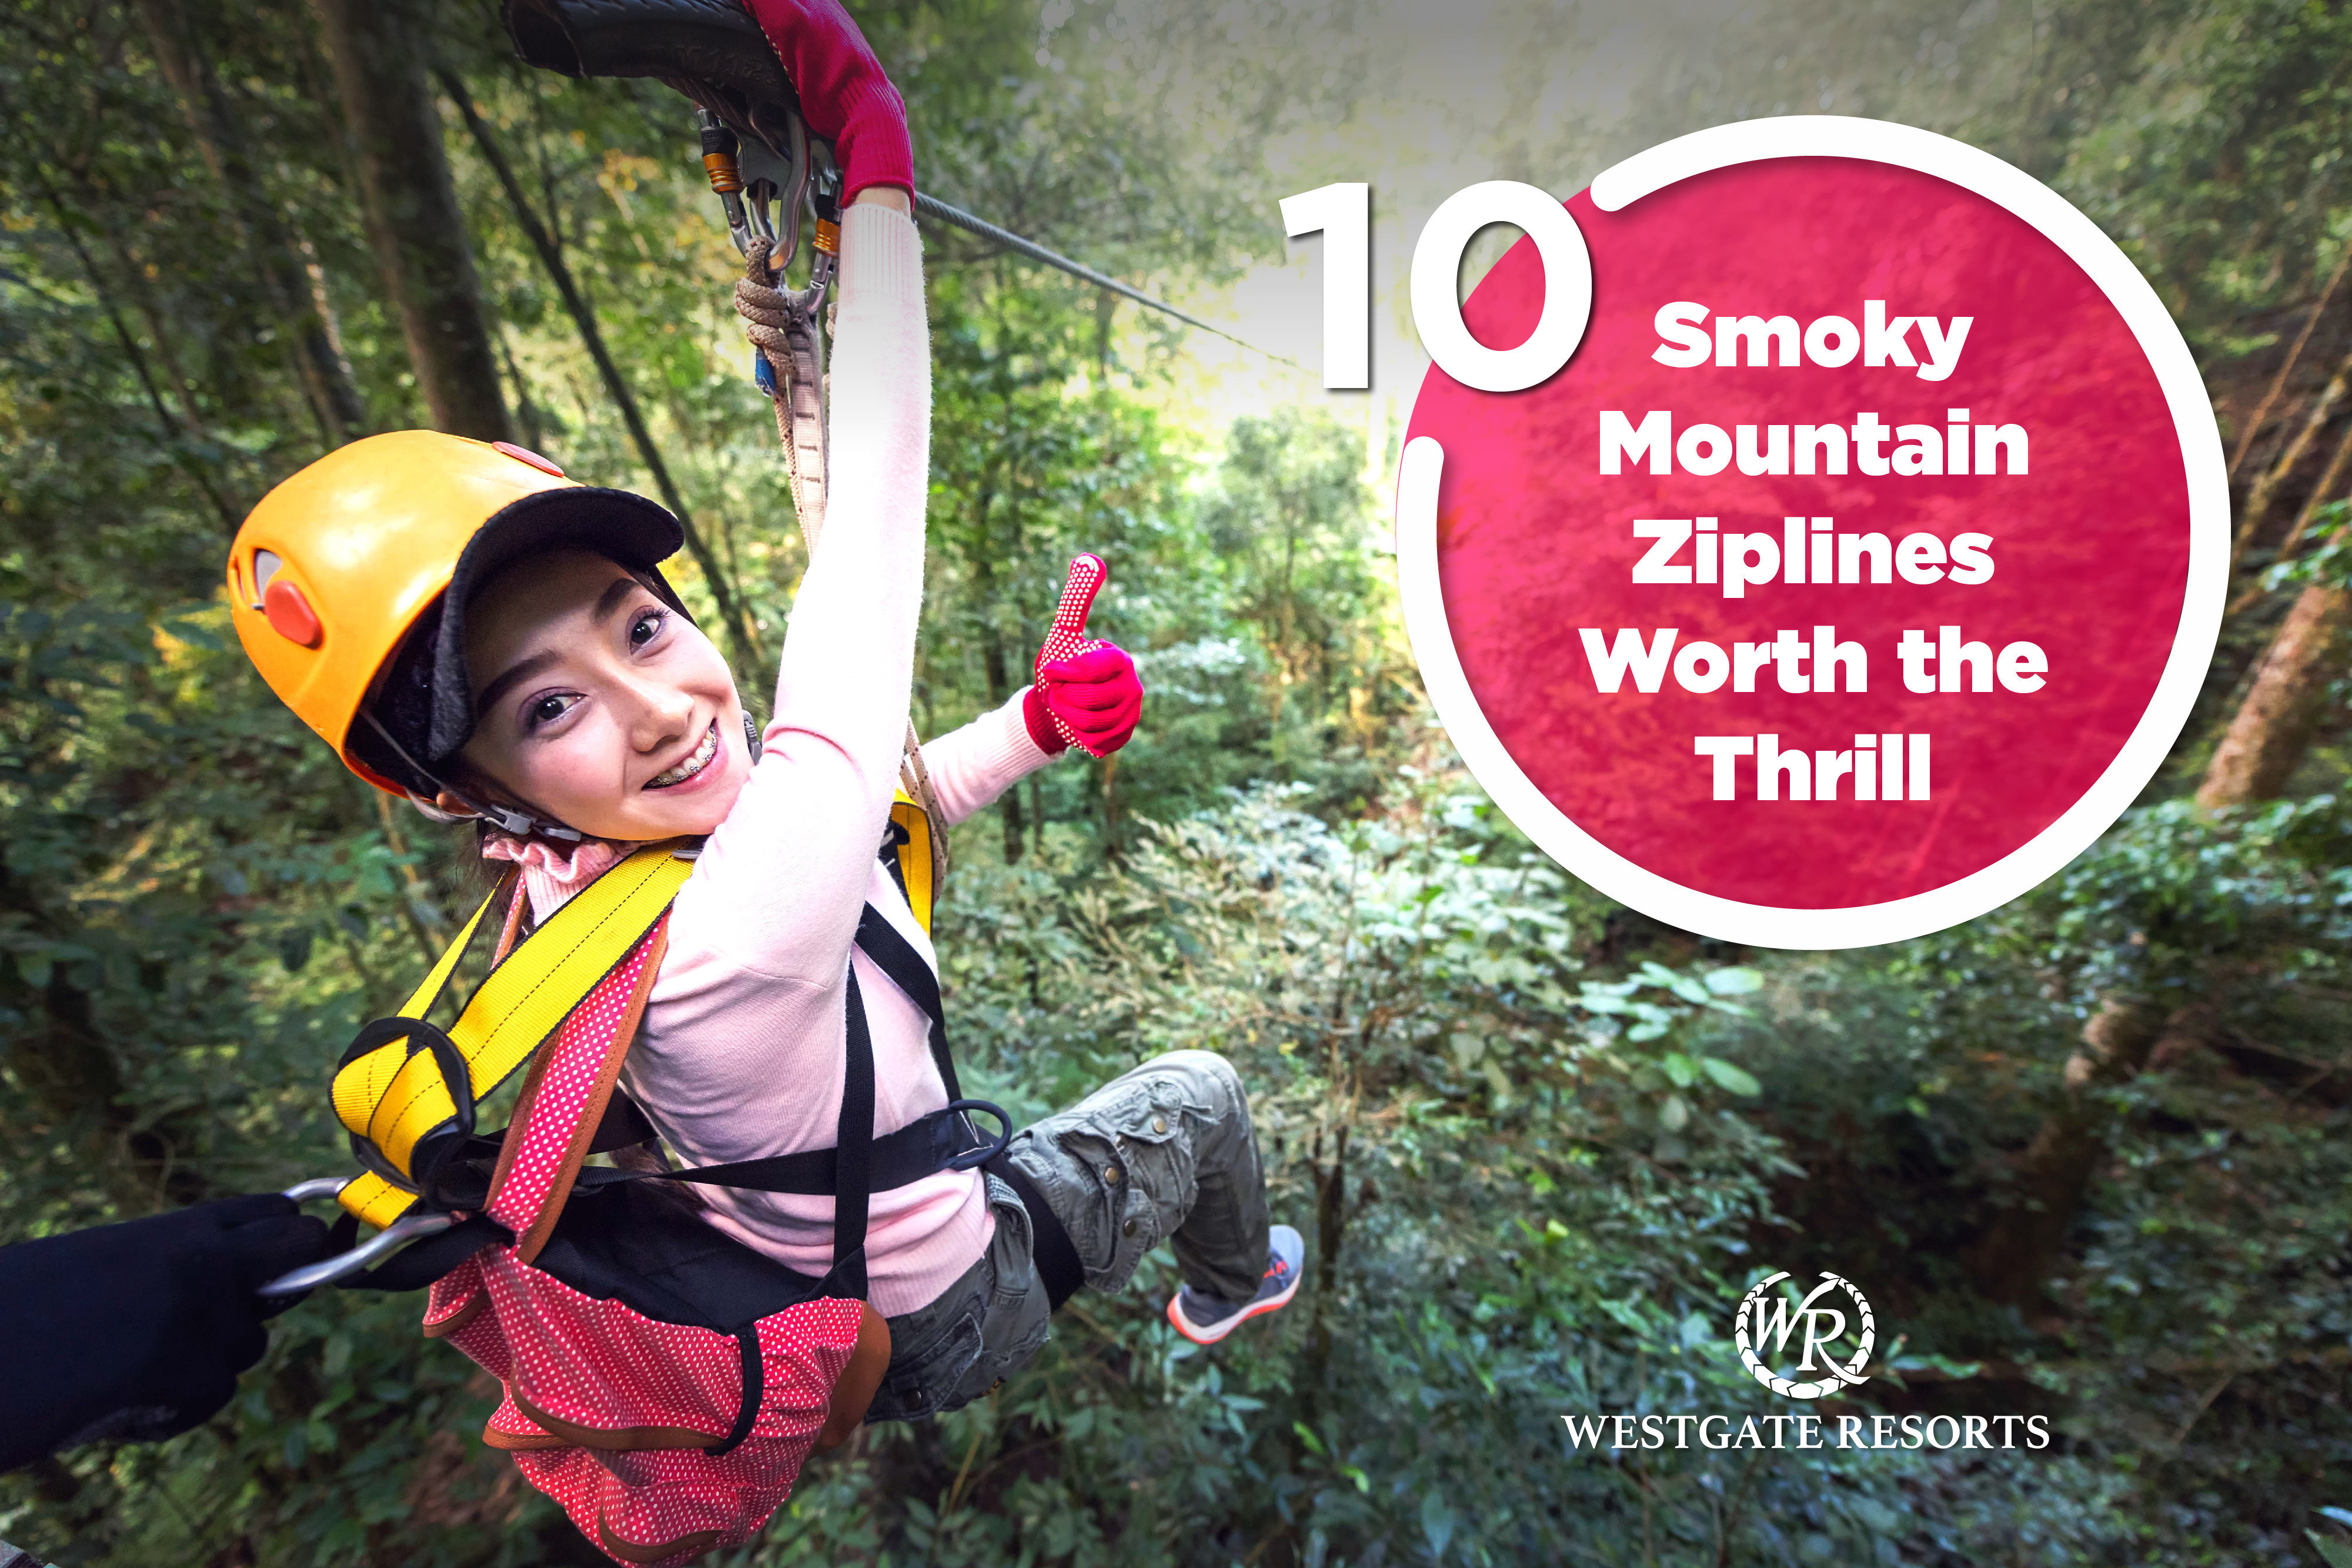 10 Smoky Mountain Ziplines Worth the Thrill